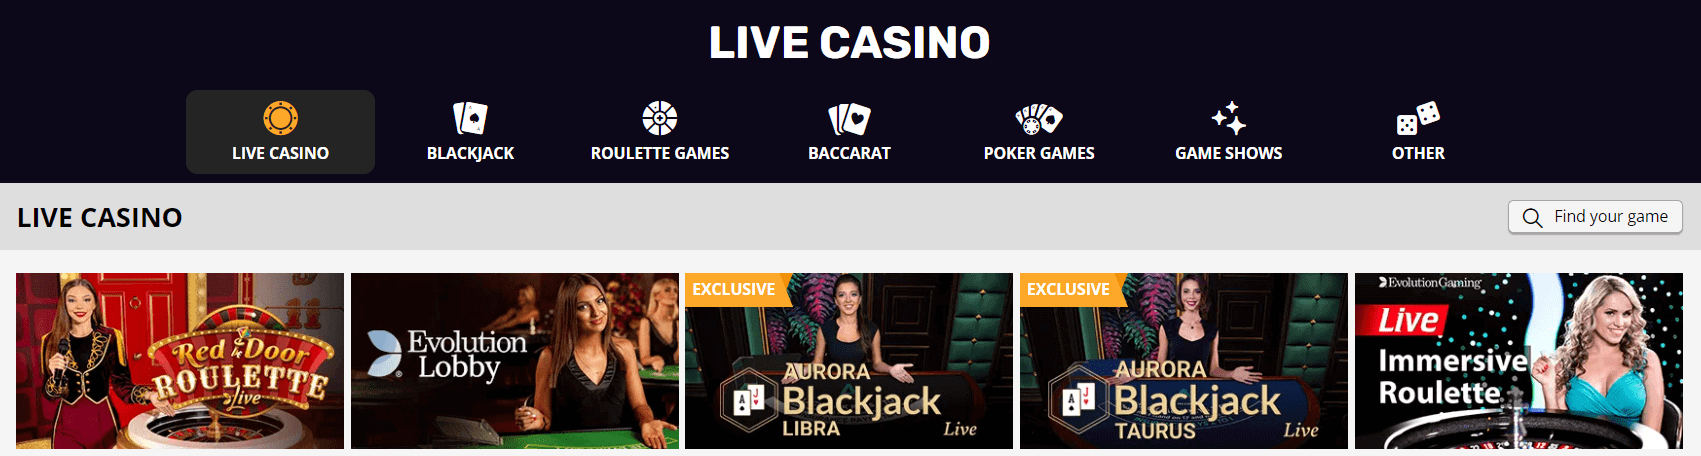 playamo casino live casino games